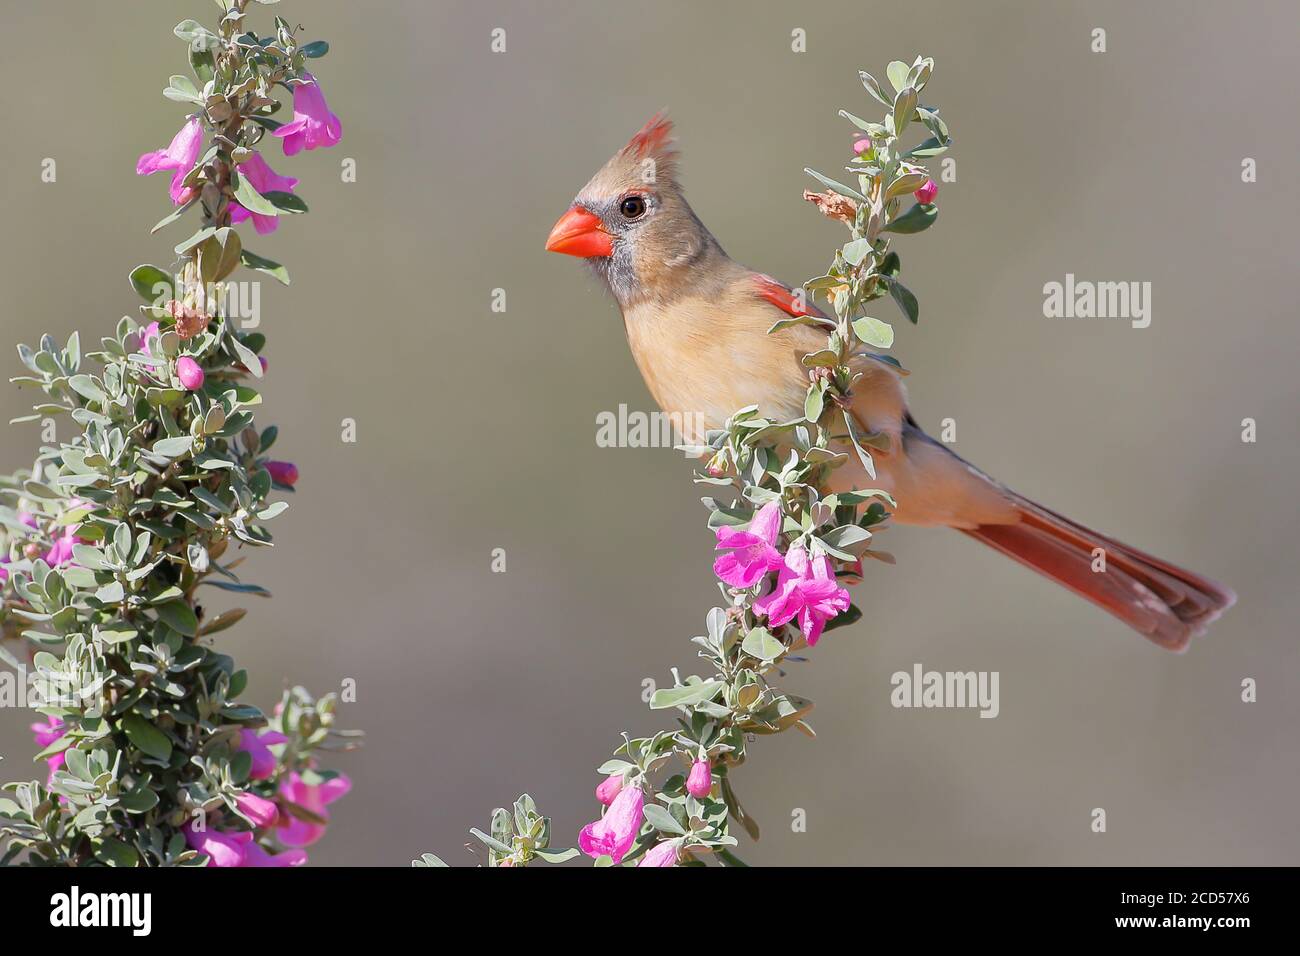 Northern Cardinal (Cardinalis cardinalis) female perched on flowers, South Texas, USA Stock Photo